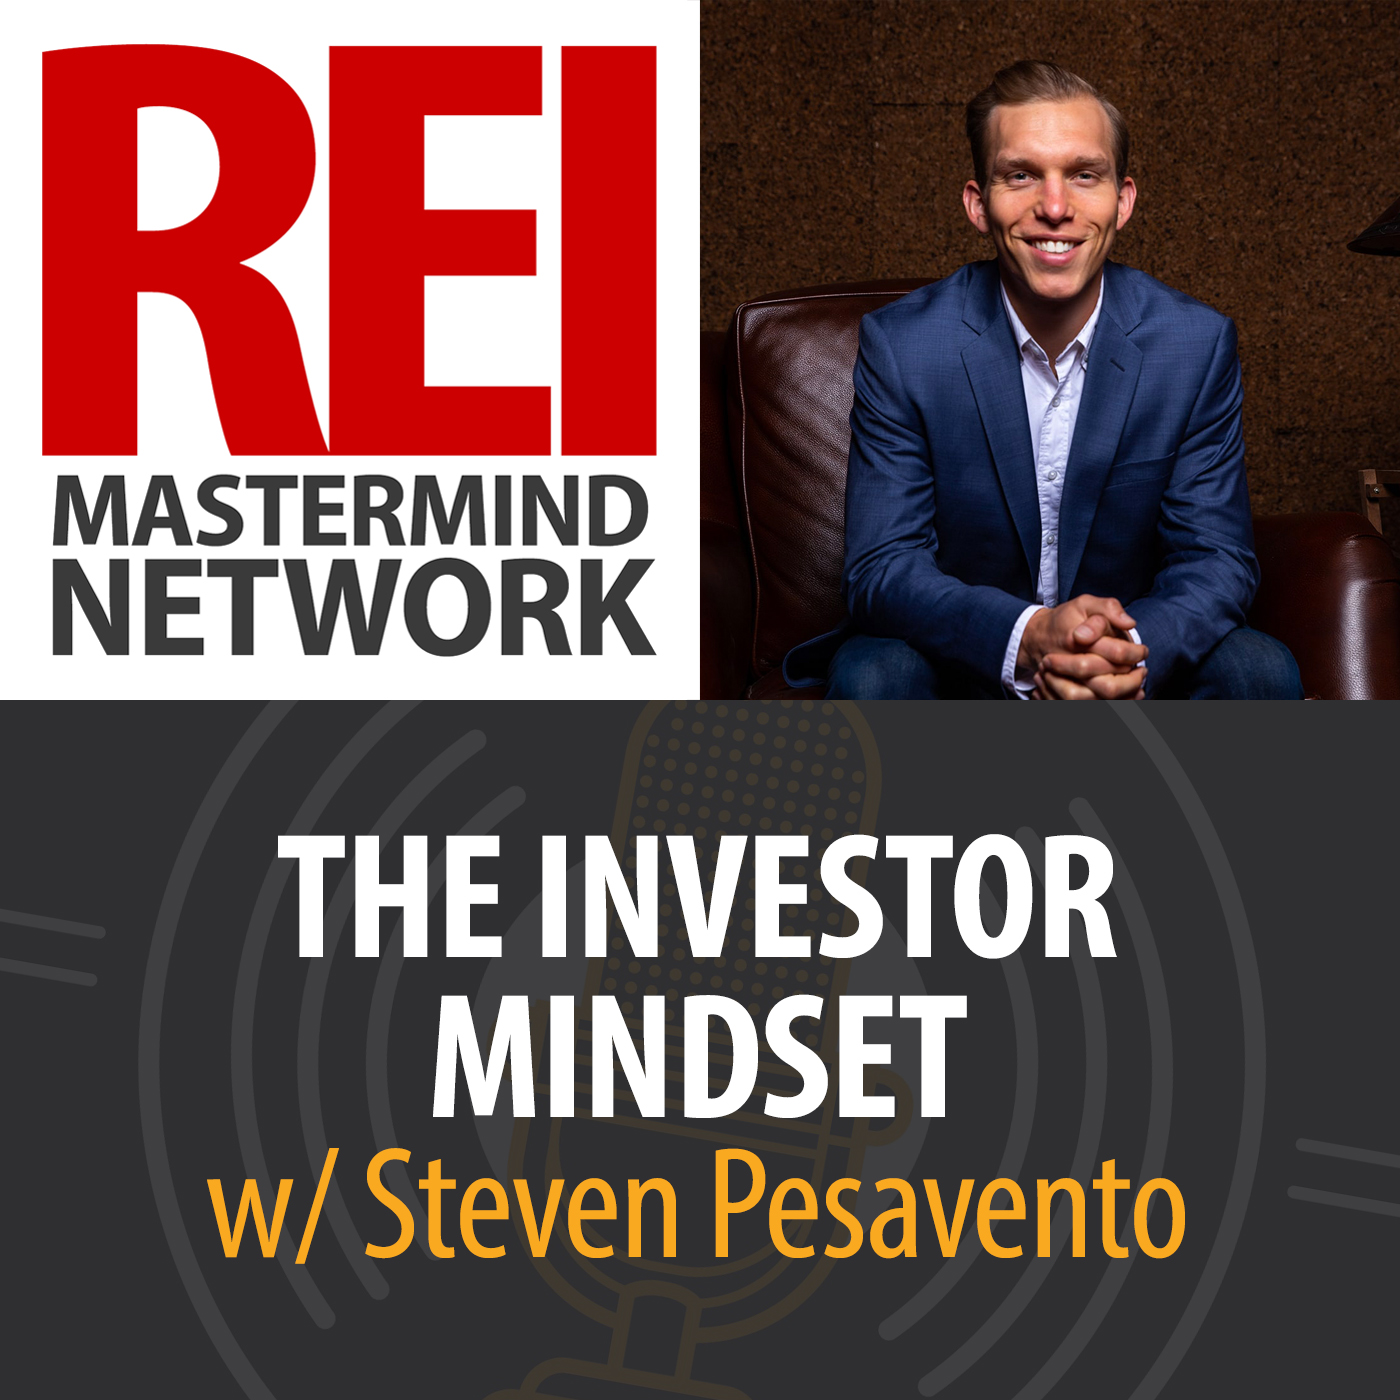 The Investor Mindset with Steven Pesavento